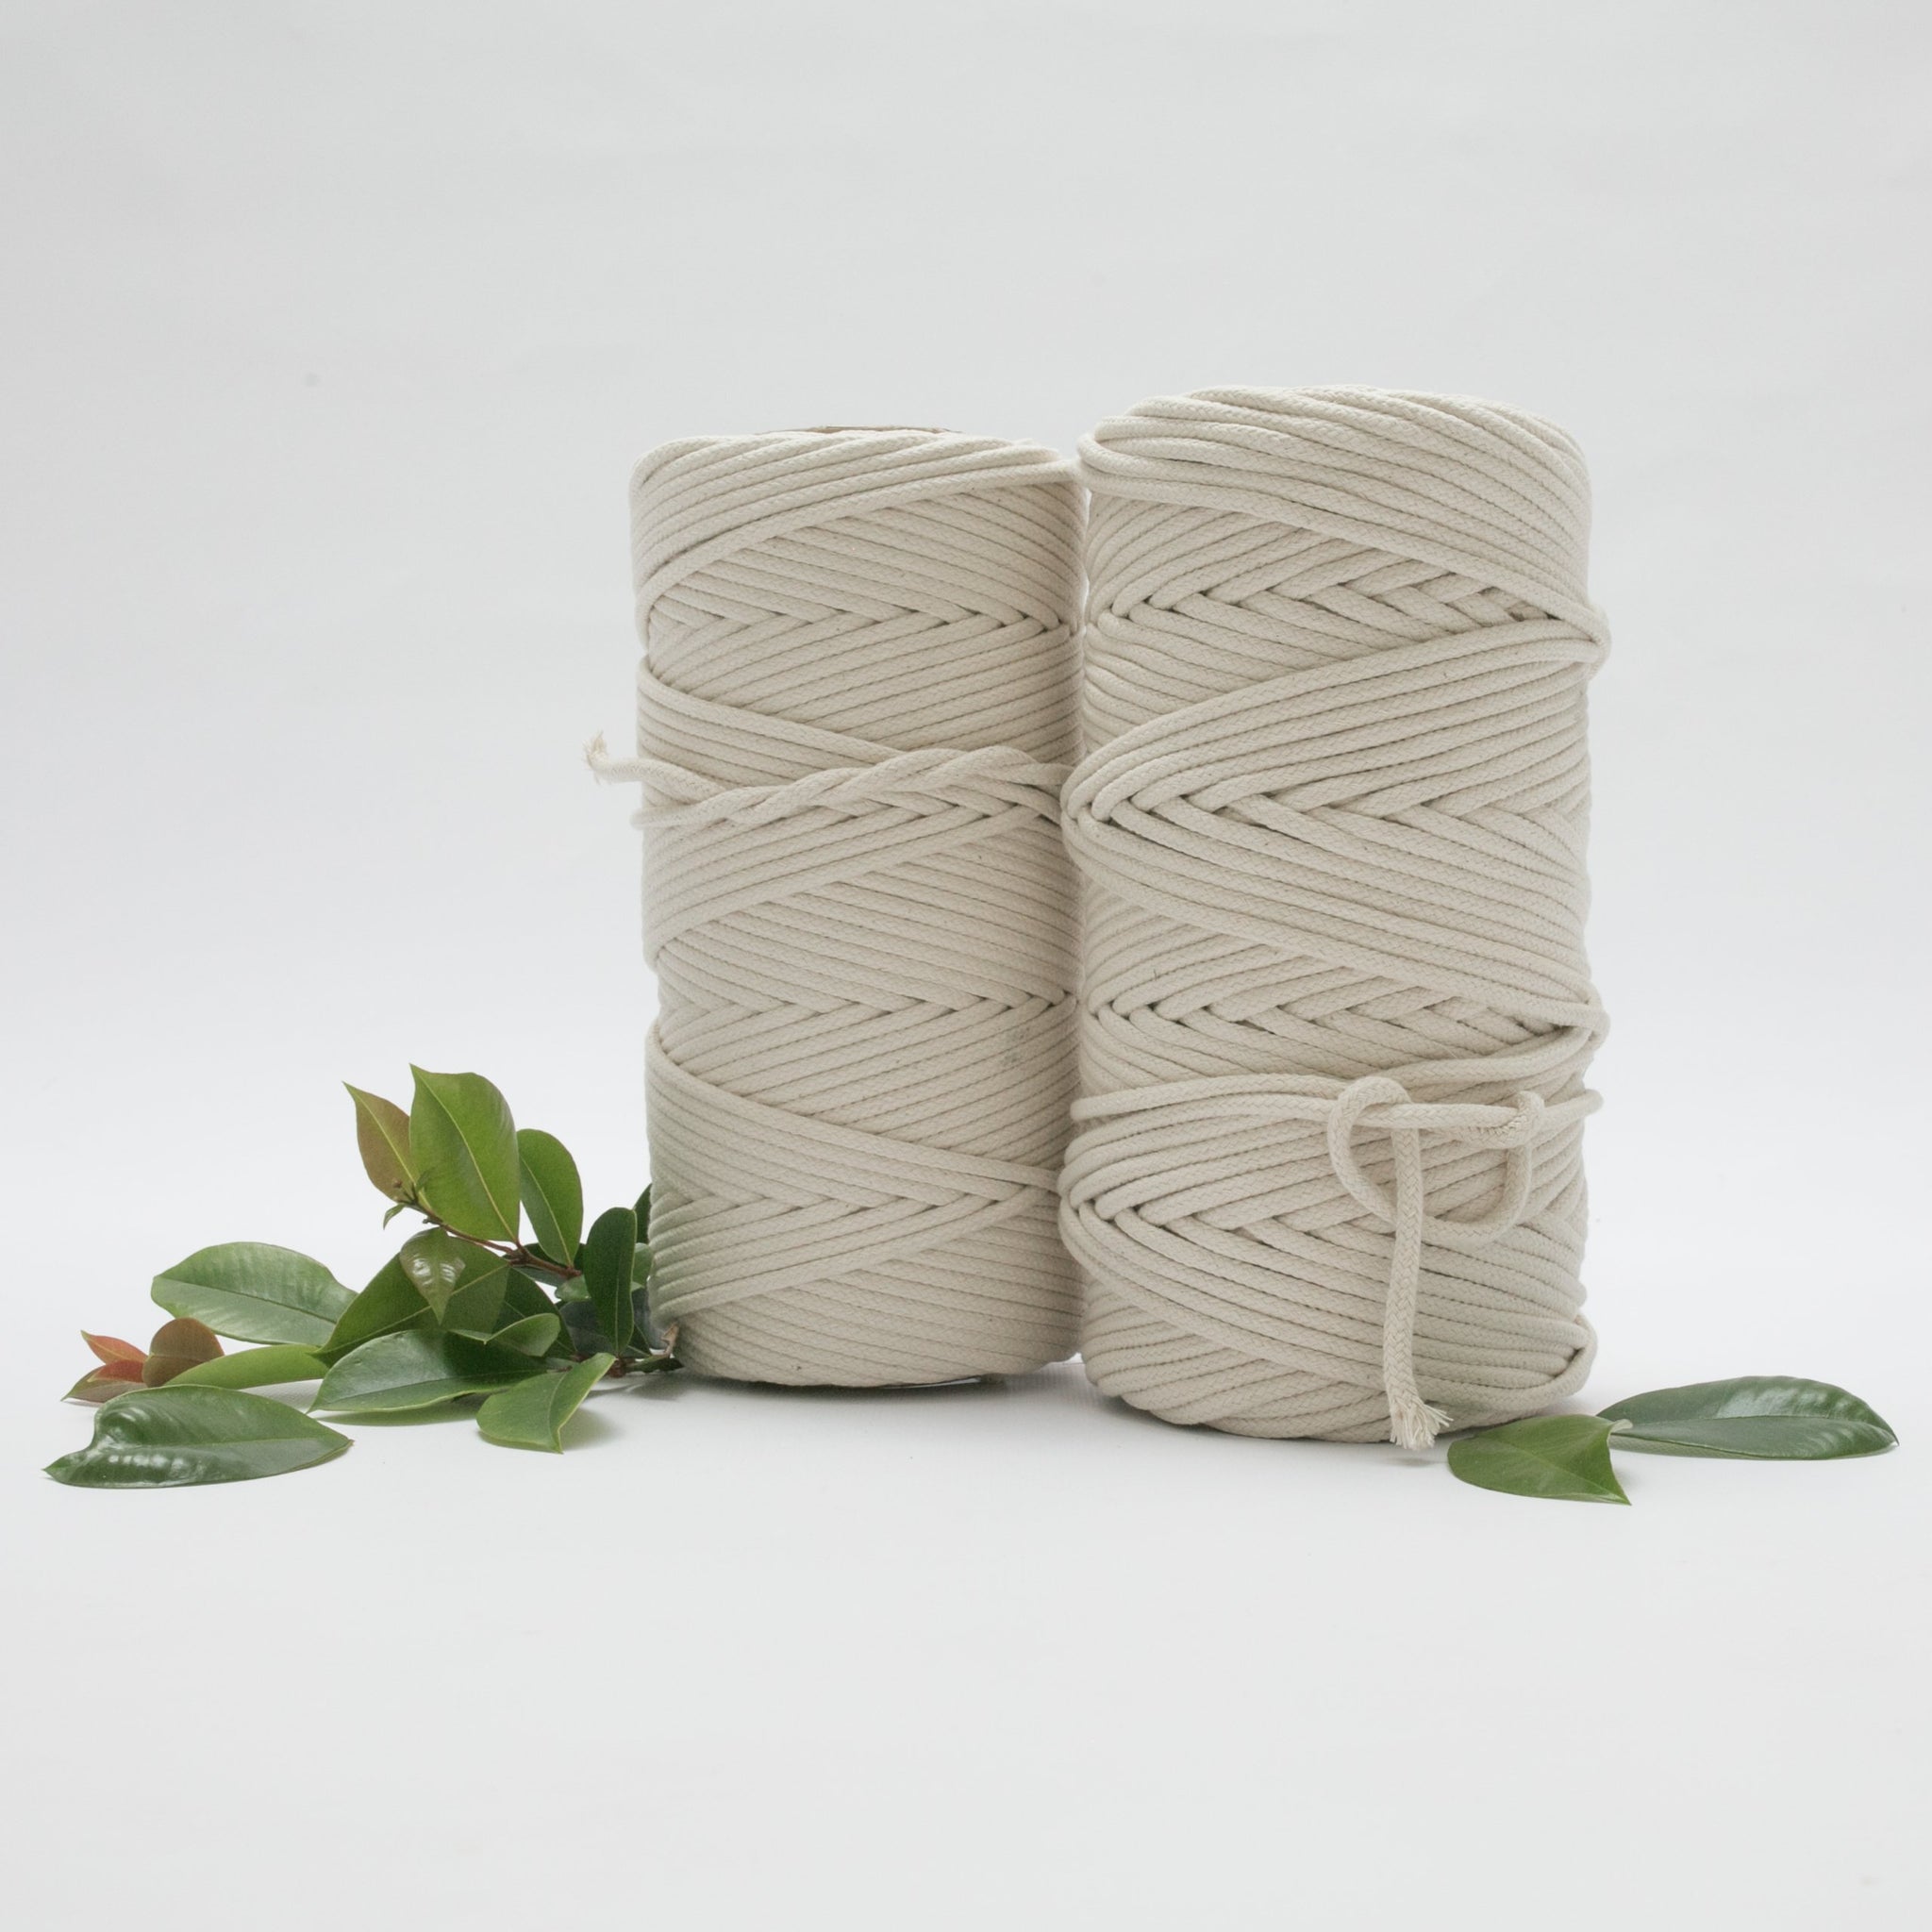 Australian Braided Sash Cord - Mary Maker Studio - Macrame & Weaving  Supplies and Education.